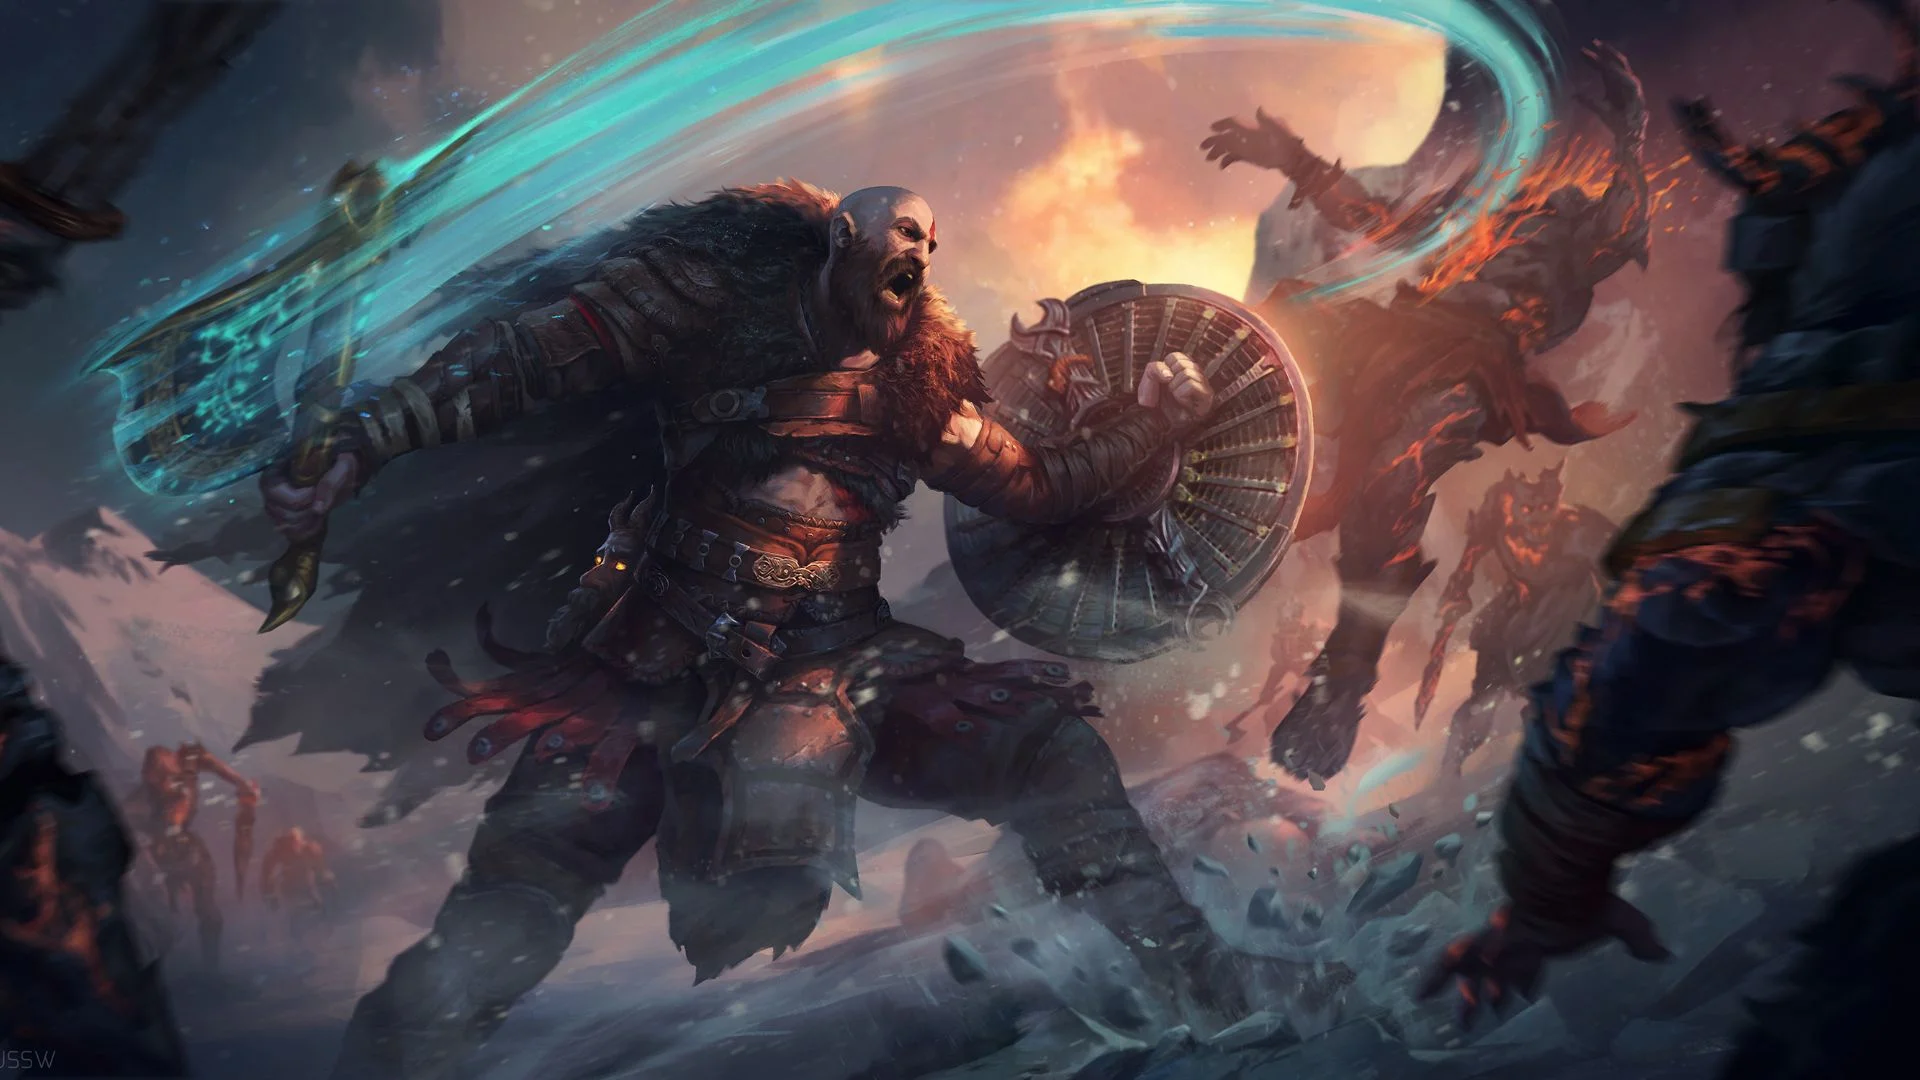 God of War Ragnarok Release Date Announcement Delayed 